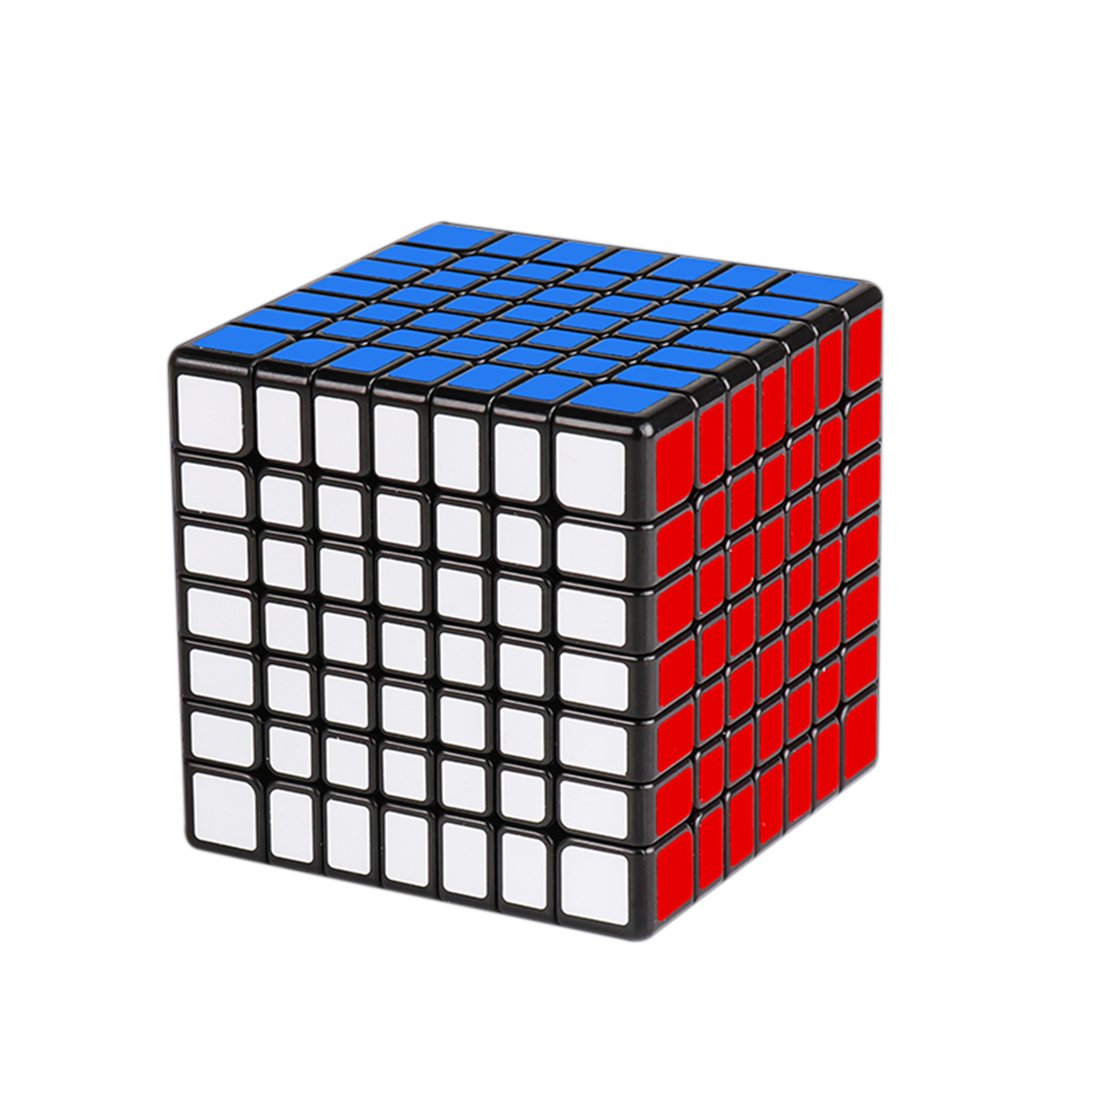 YJ8204 Moyu Aofu GTS 7x7x7 Magic Cube